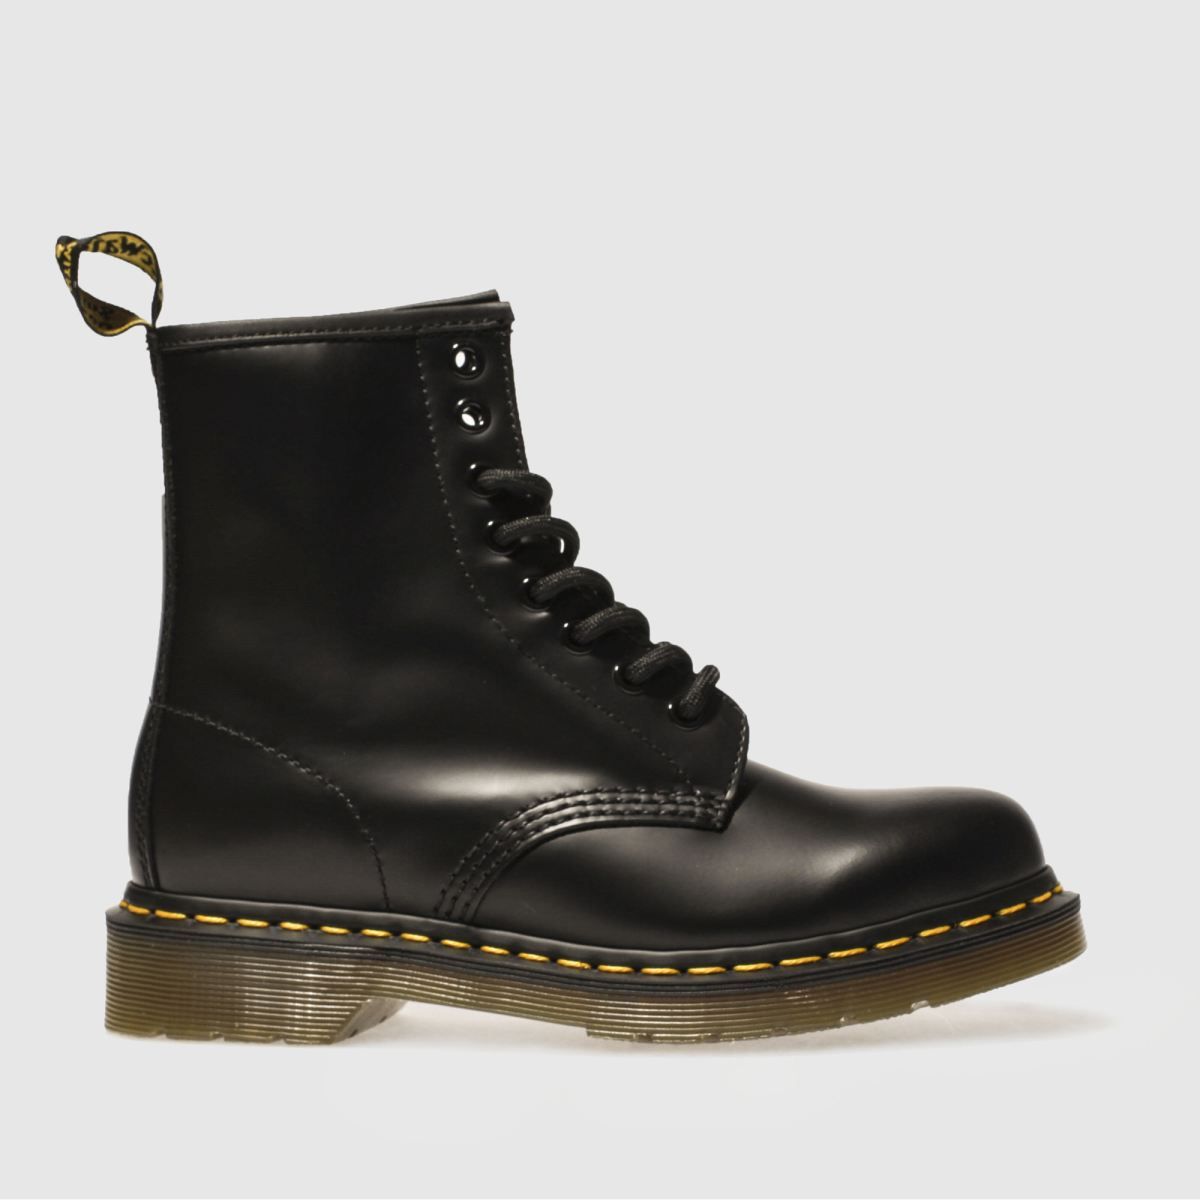 Dr Martens 1460 8 eye boots in black | Schuh